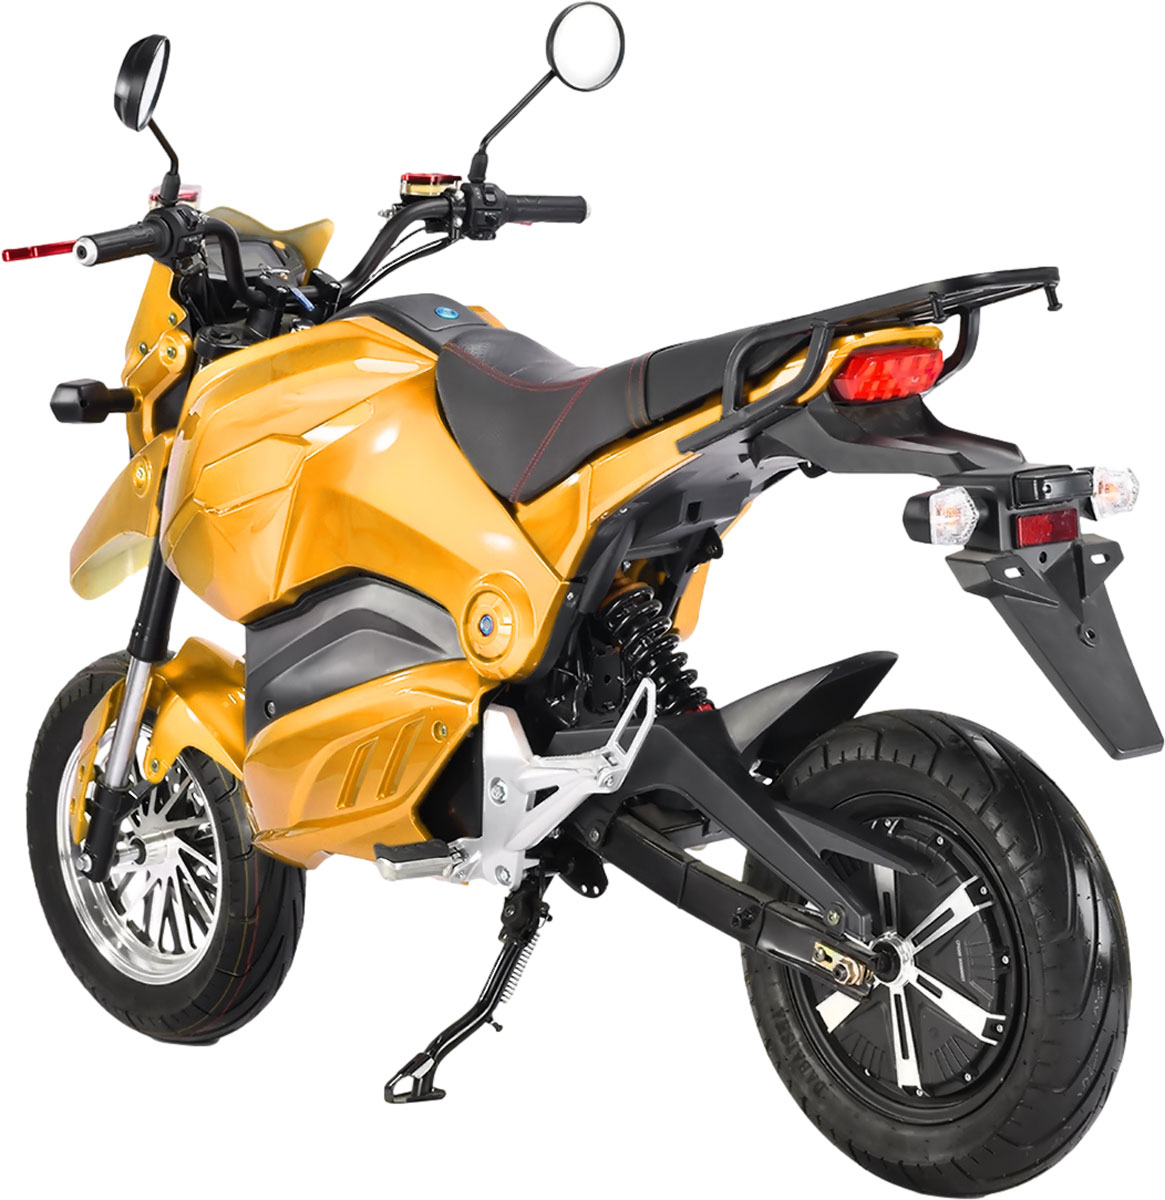 Rock'nBikes RE8SM Supermoto Elektro-Motorrad Orange-Schwarz 45km/h Seite Hinten Links